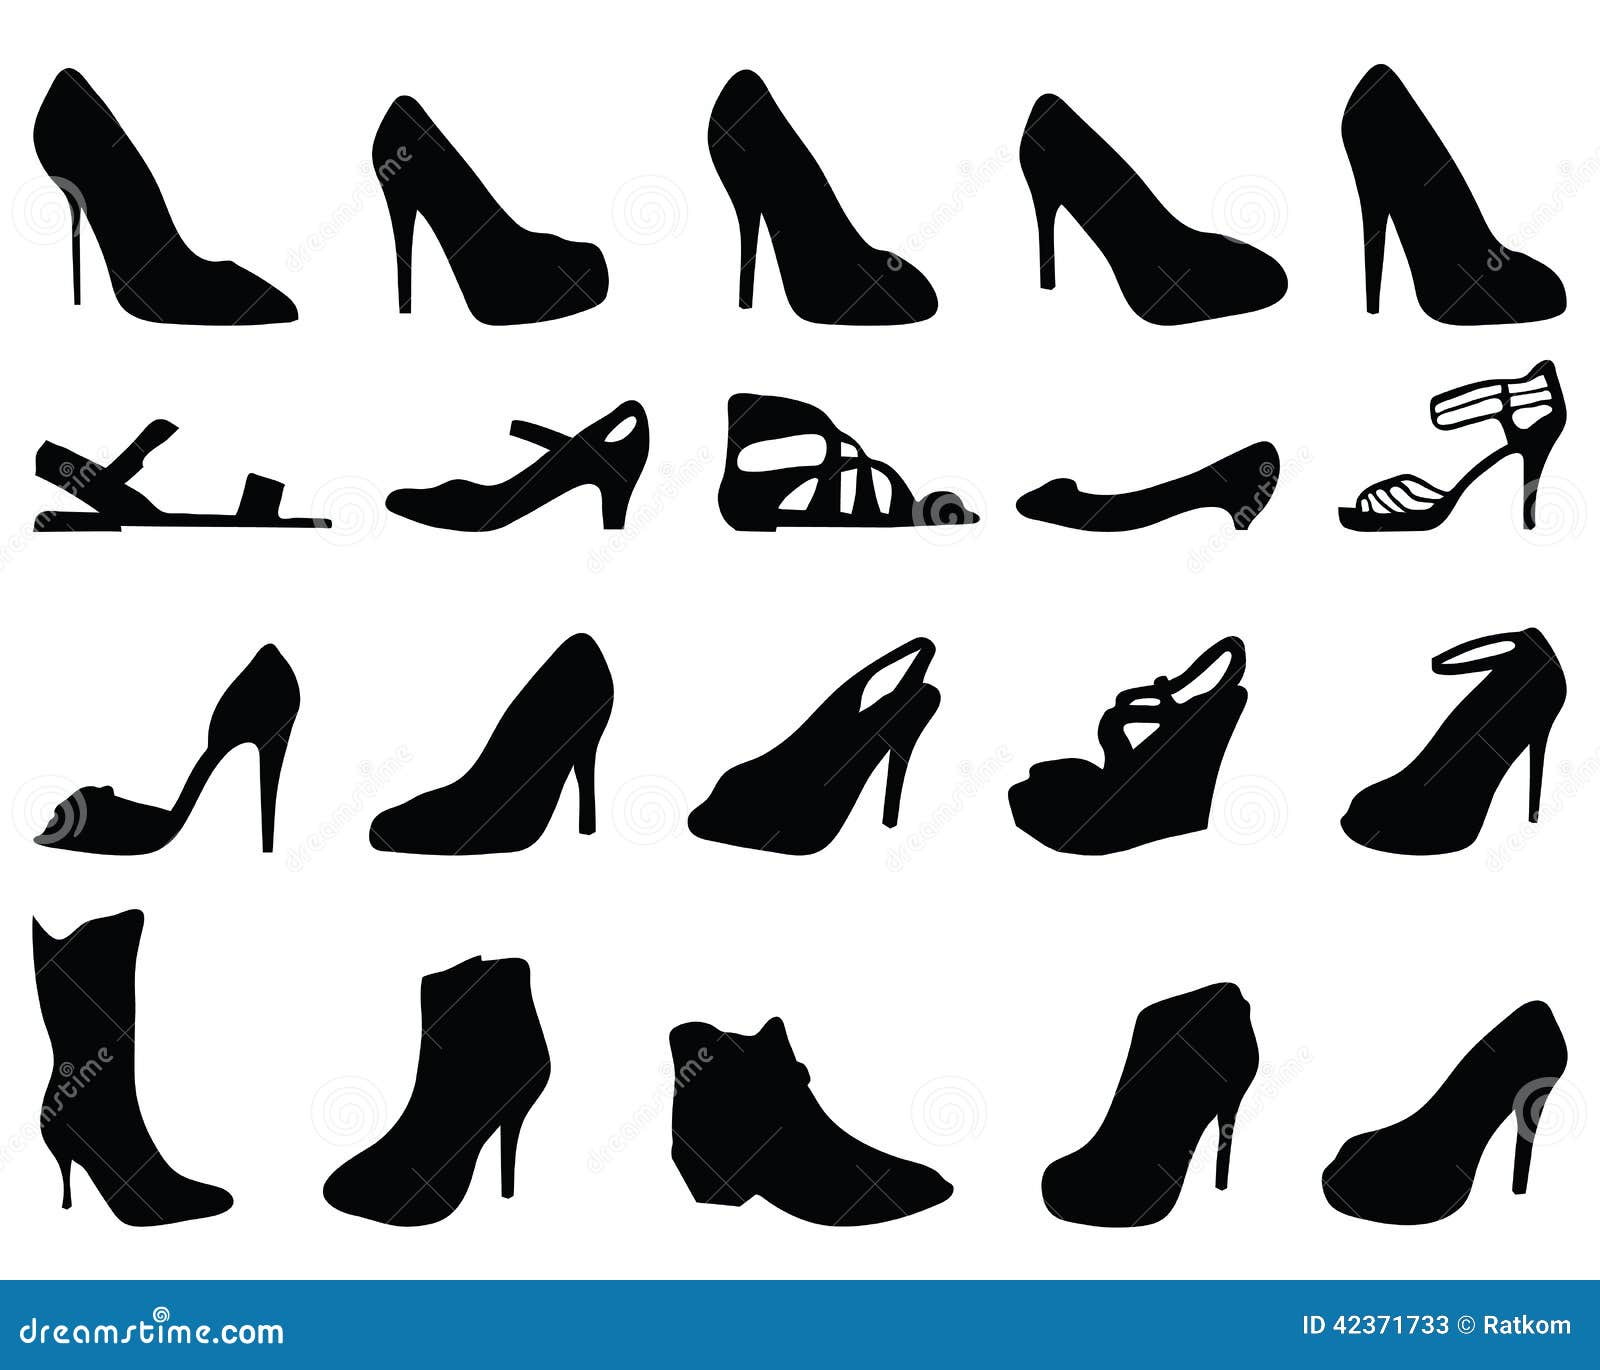 Shoes 2 stock illustration. Illustration of style, heels - 42371733